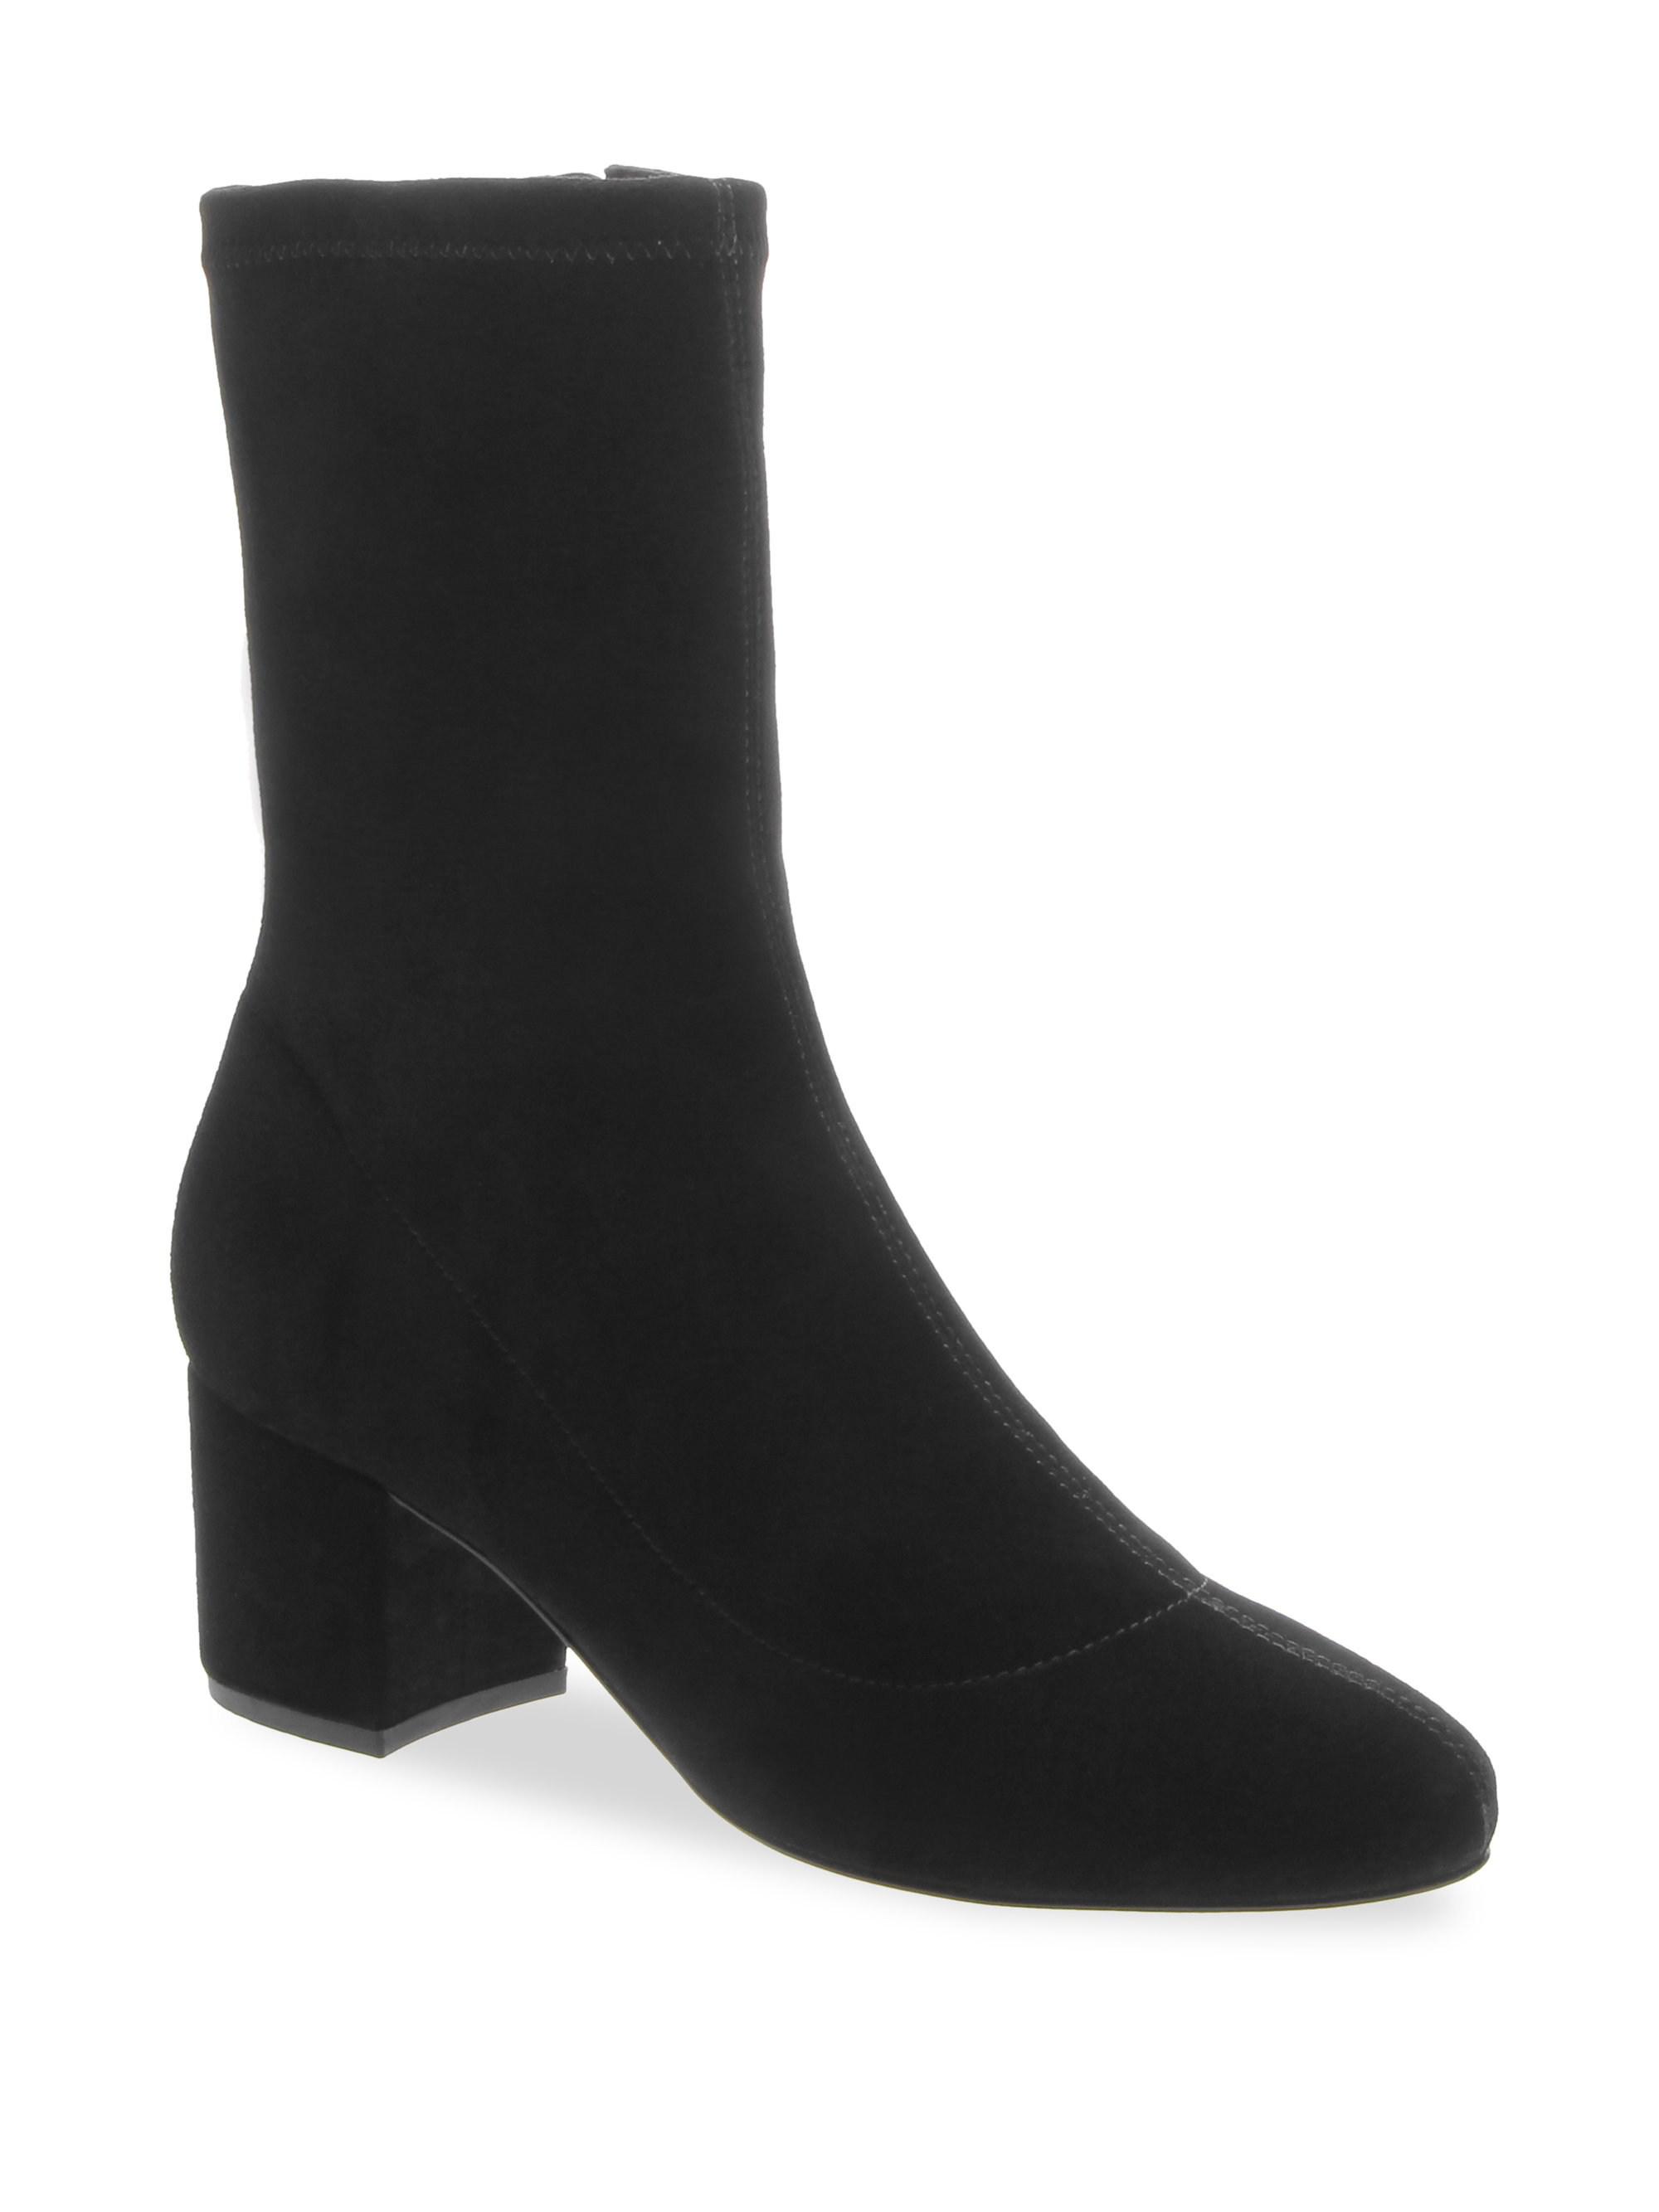 Schutz Women's Stretch Suede Ankle Boots - Black - Size 7.5 - Lyst